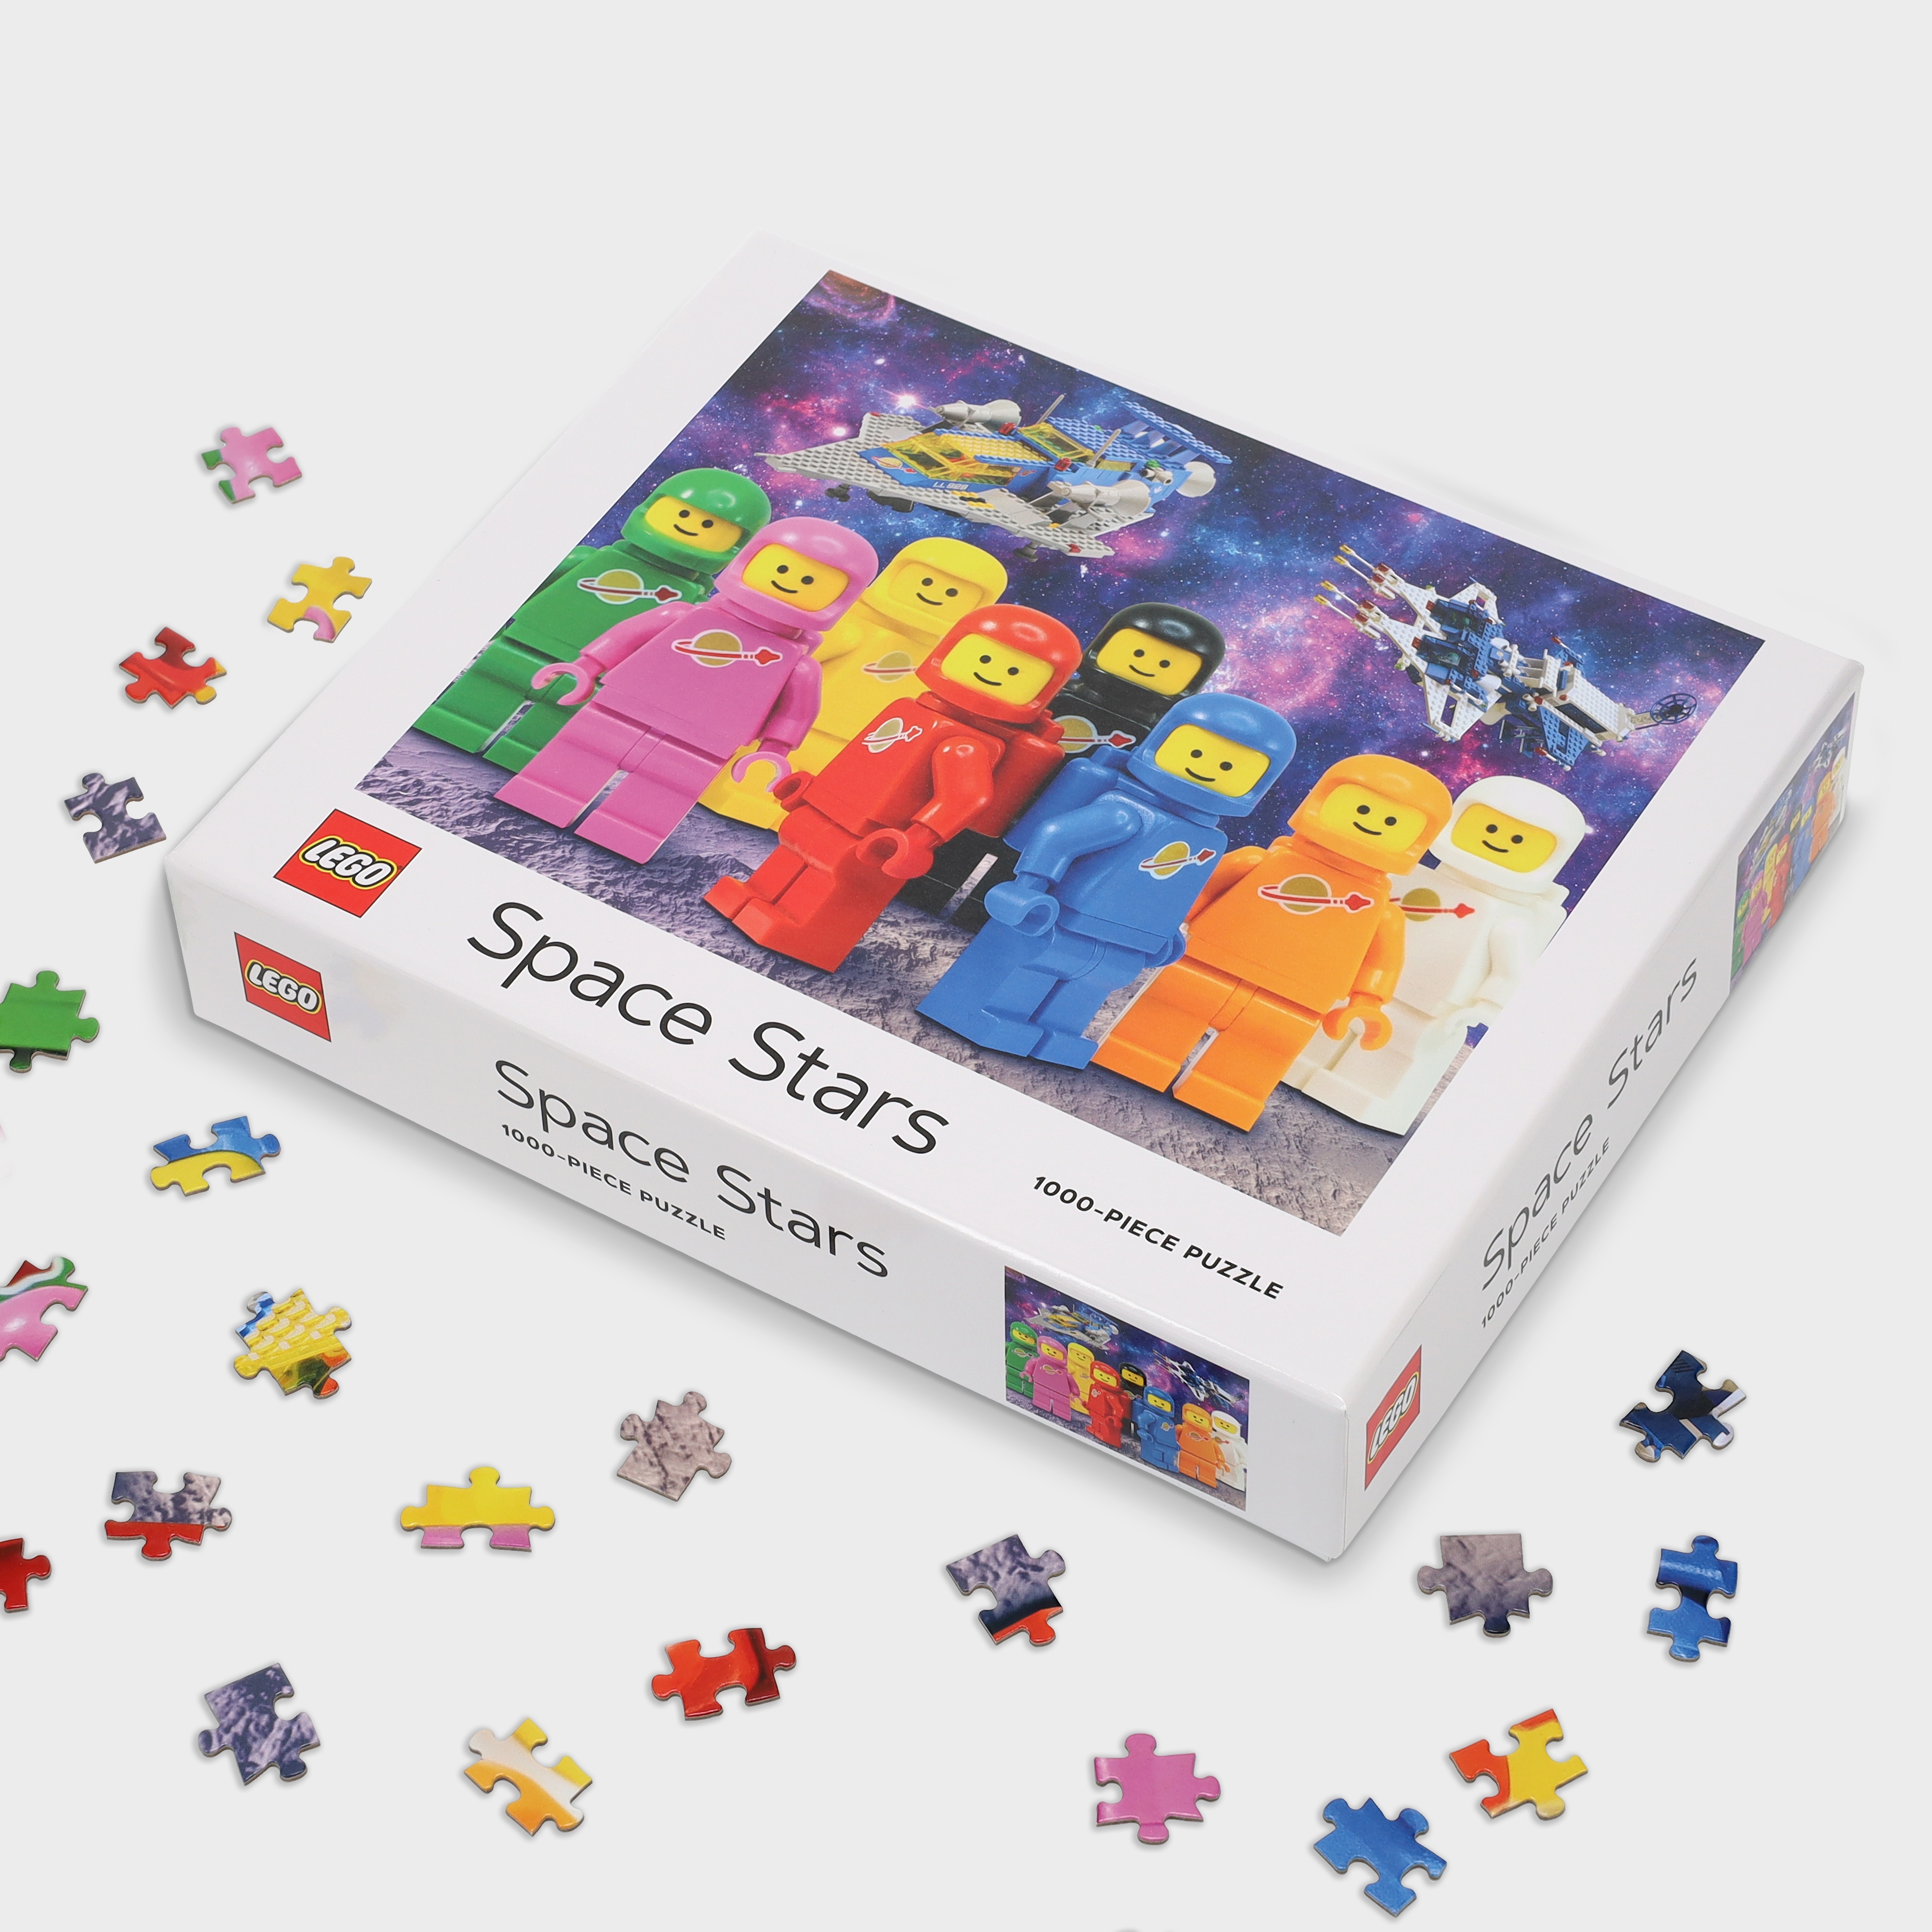 Space Stars 1,000-Piece Puzzle 5007066, Minifigures